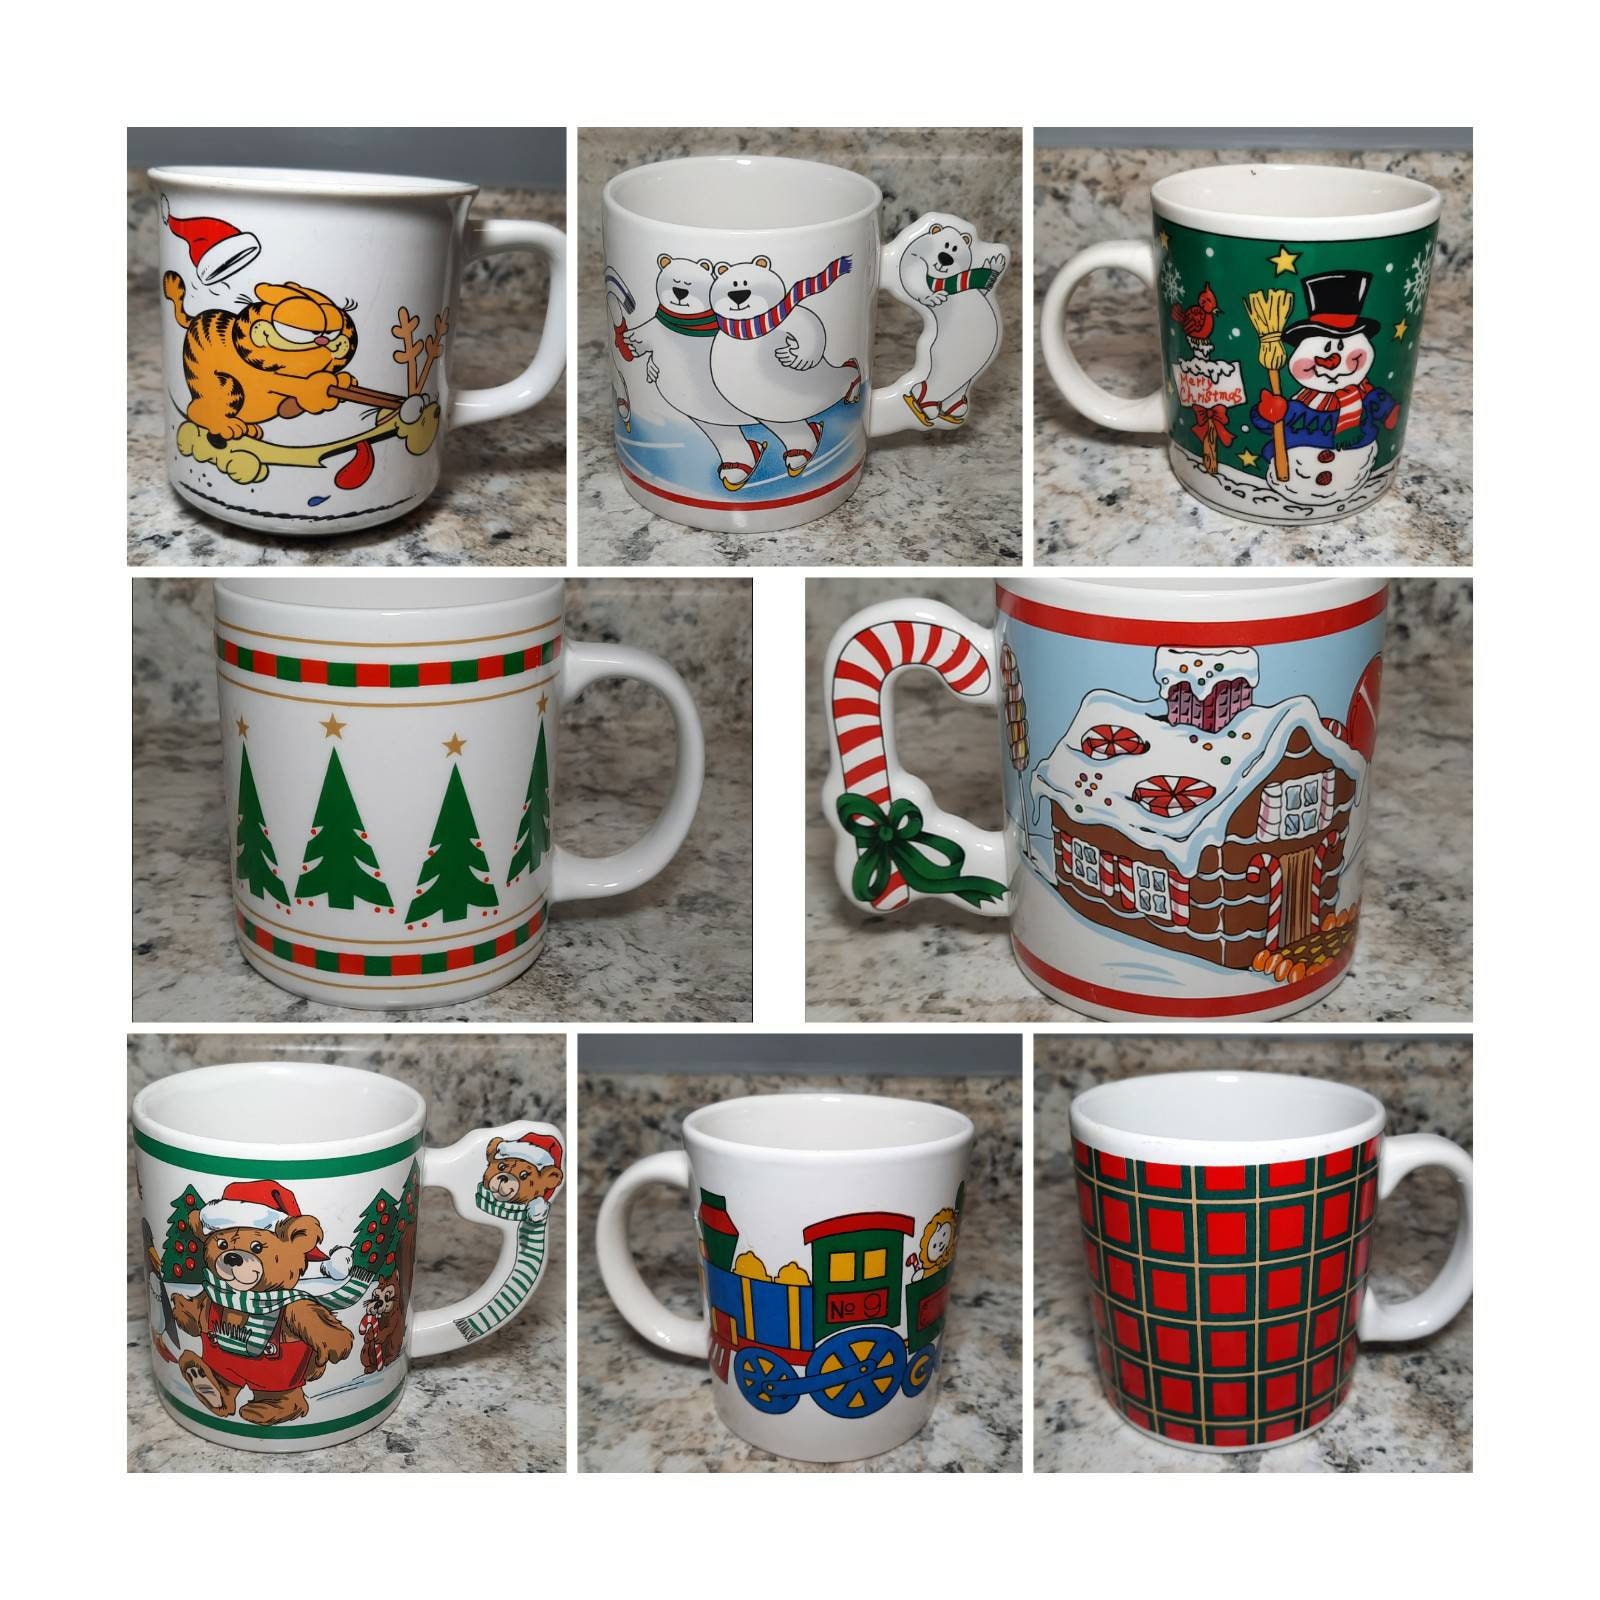 Vintage Christmas Ceramic Coffee Mugs Lot of 2